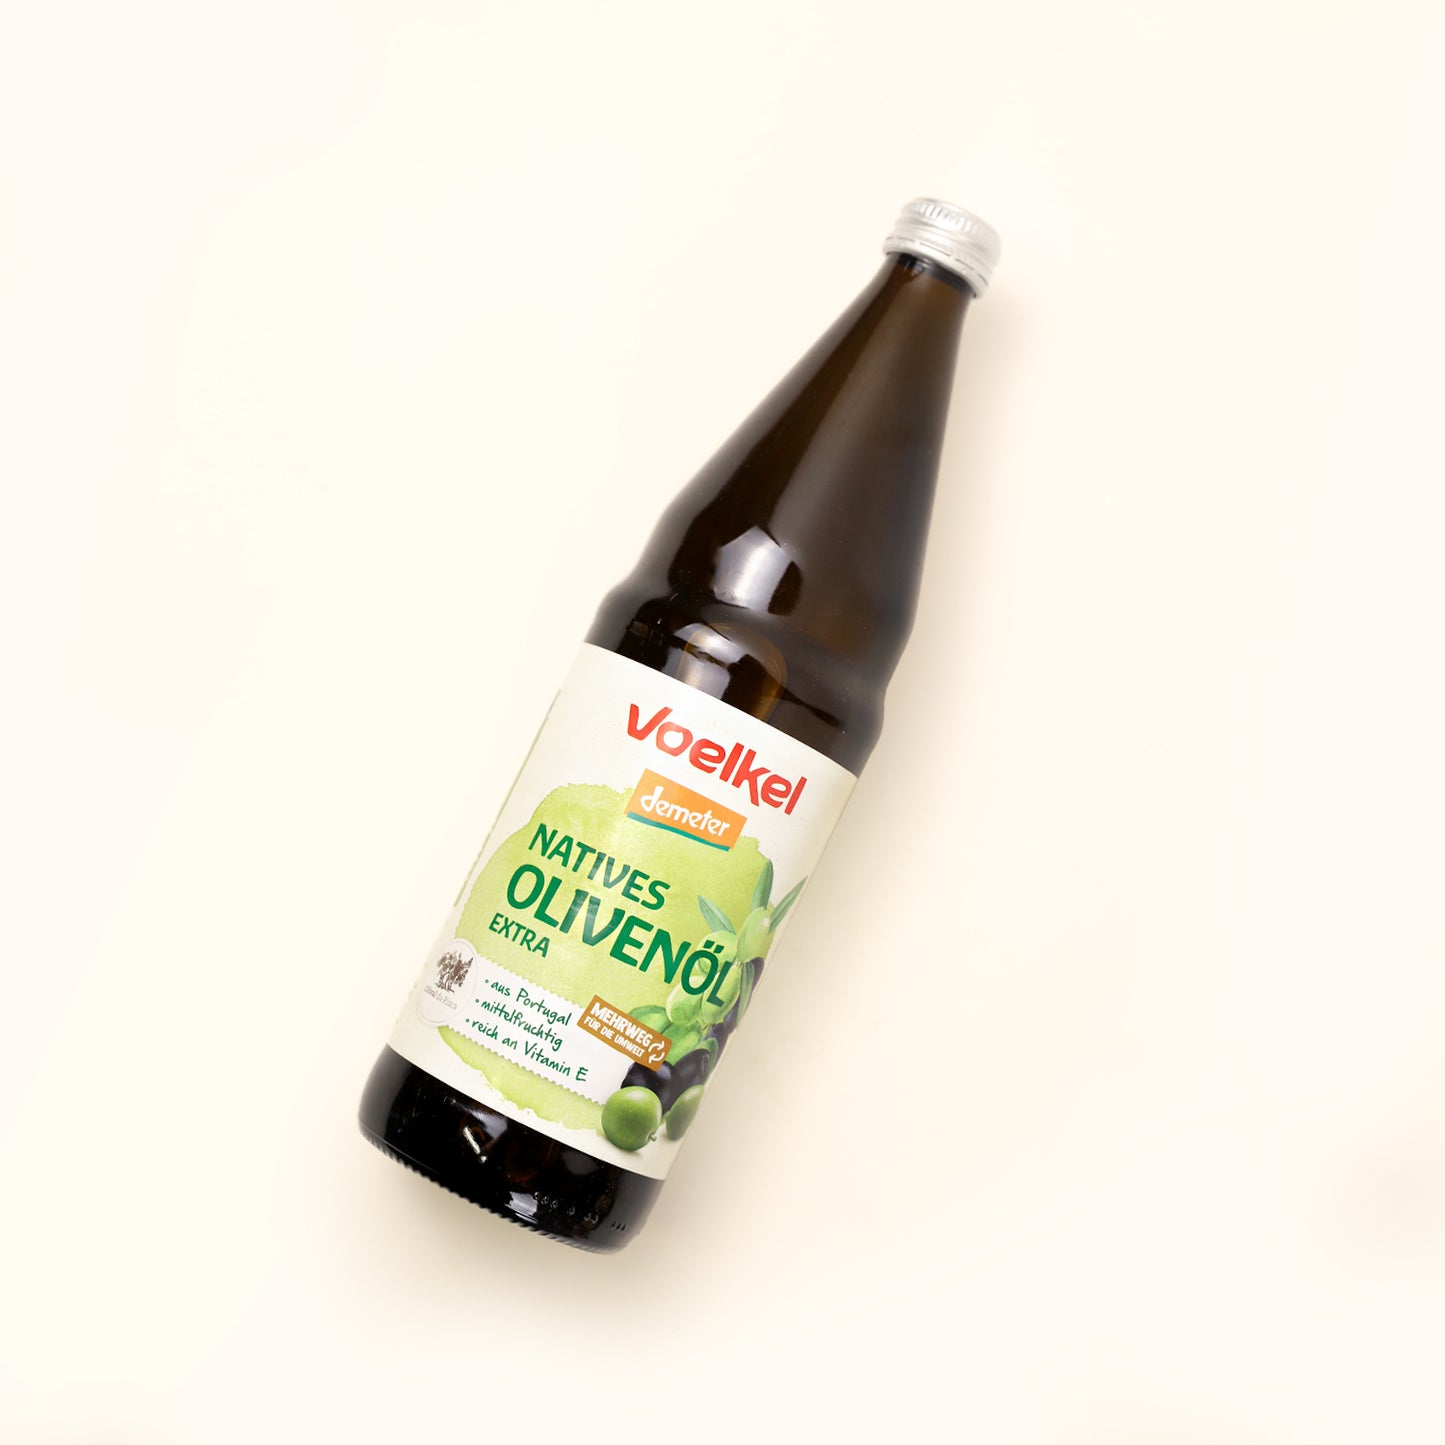 Demeter-Olivenöl nativ extra | 0,75 L